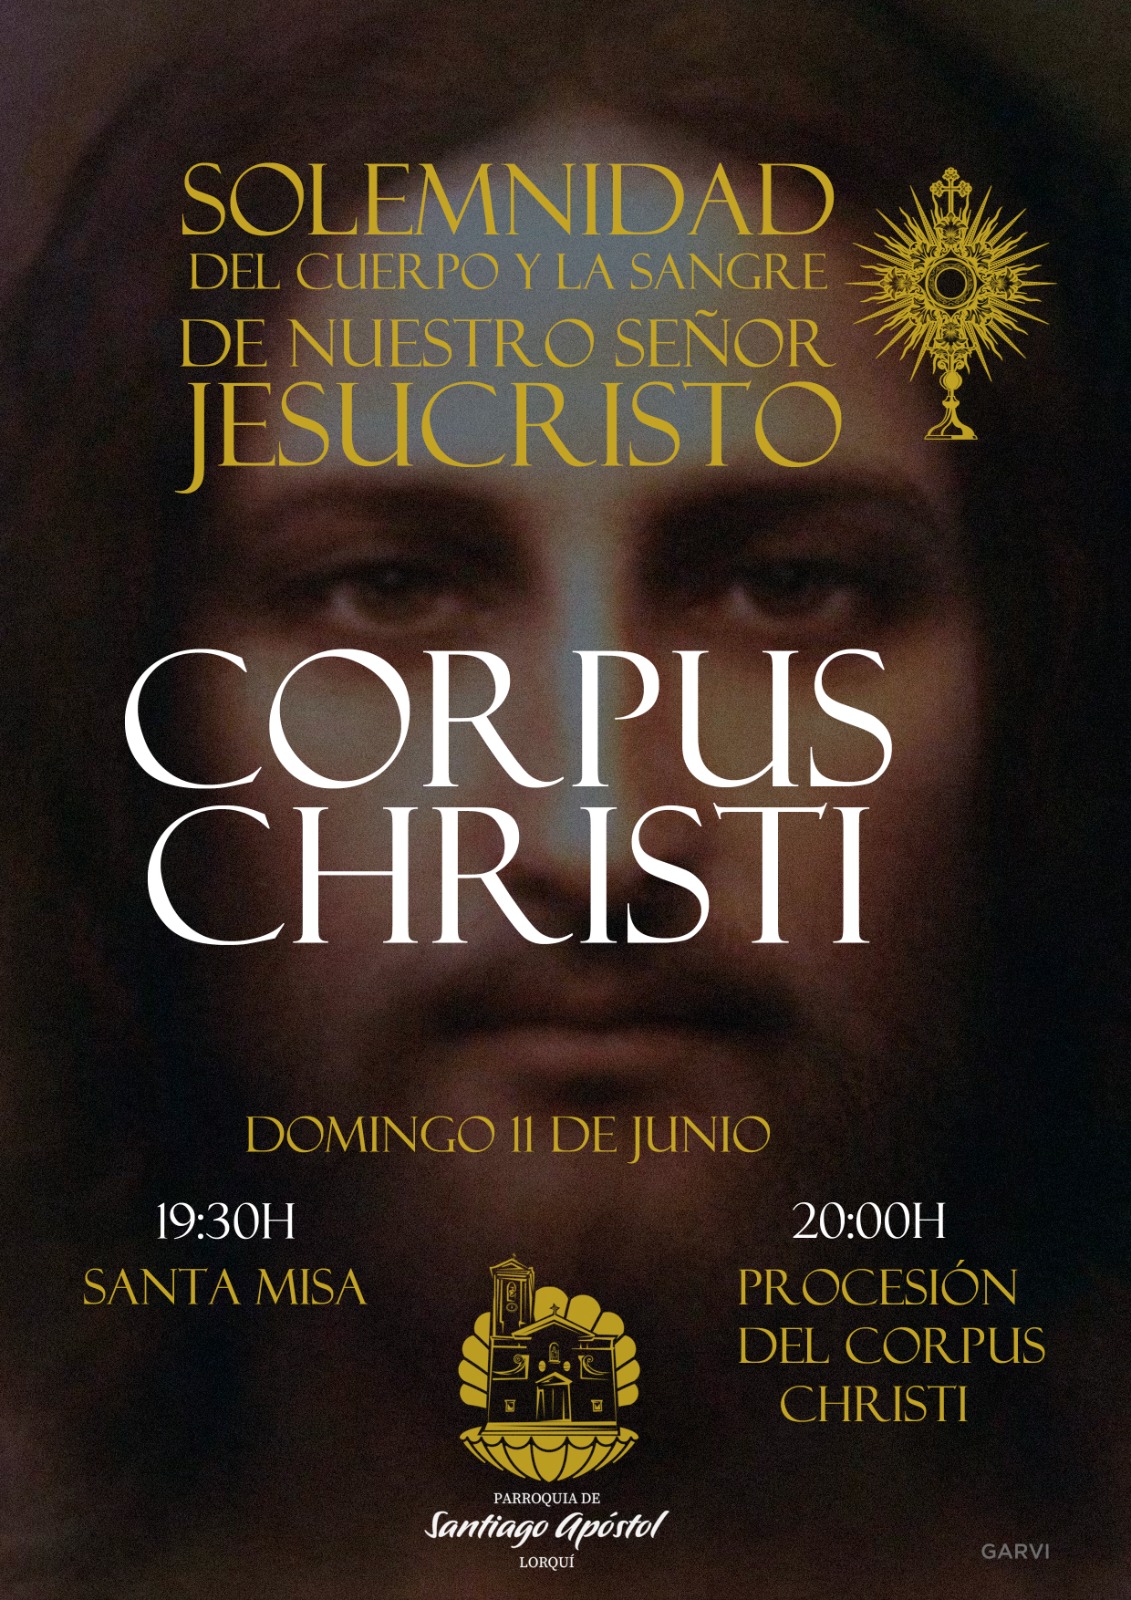 FIESTA DEL CORPUS CHRISTI: Domingo 11 de junio